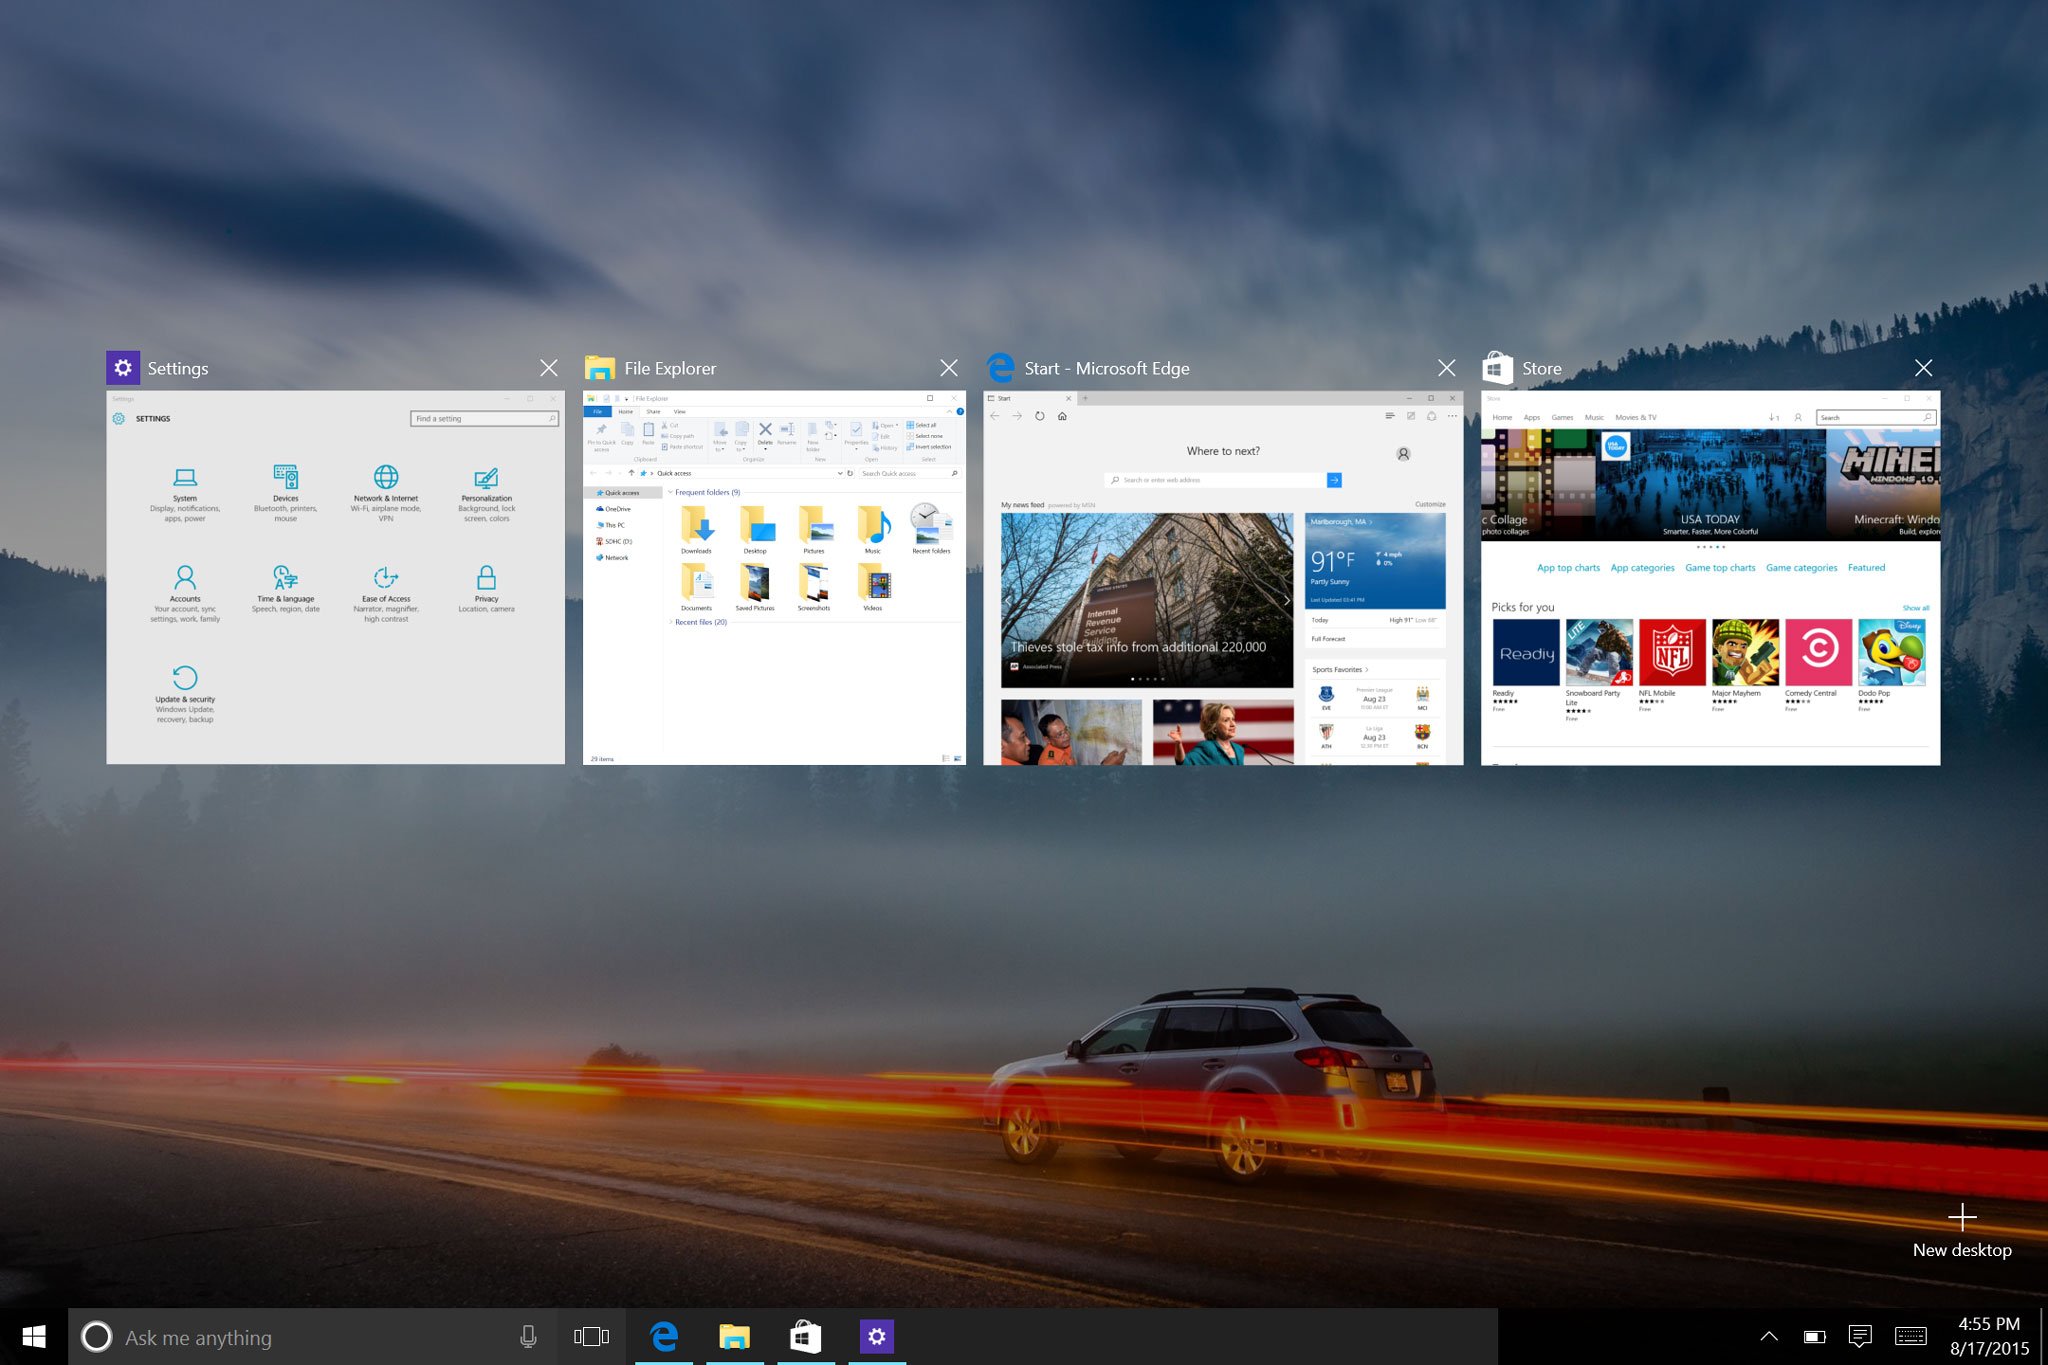 Windows 10 Task View